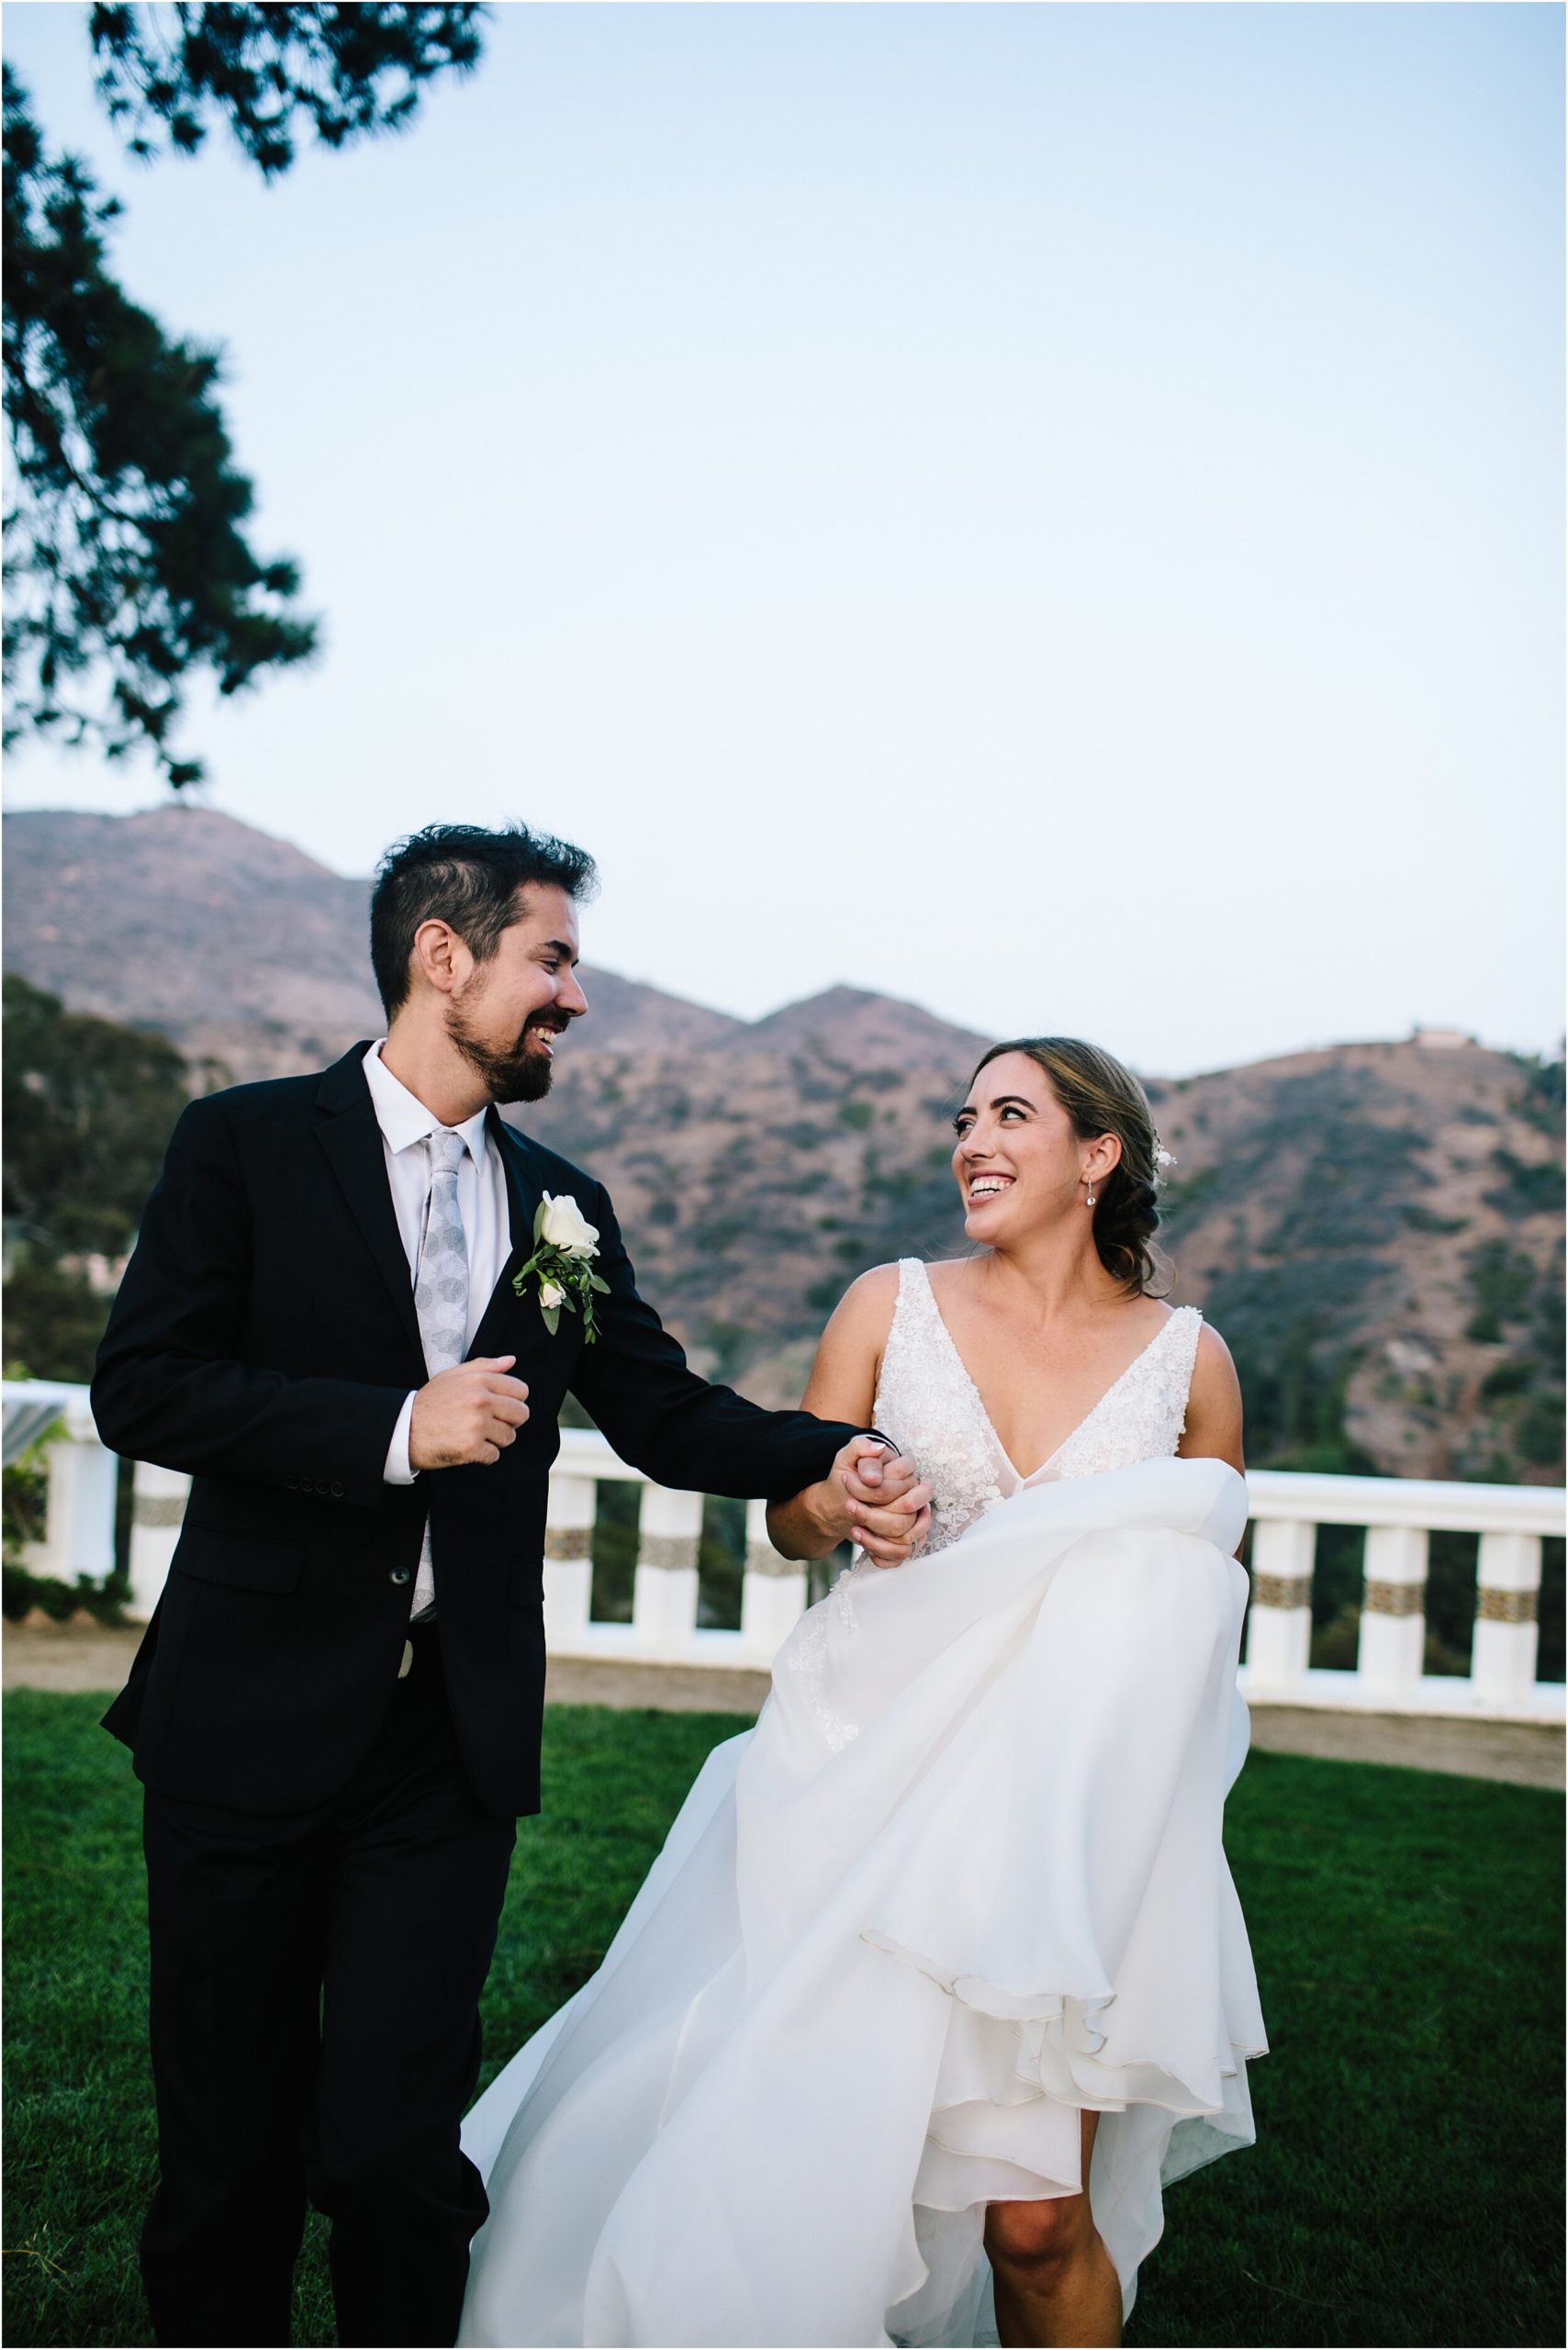 Caitlin and jason | Small Malibu Wedding | Malibu Elopement Photographer_0056.jpg